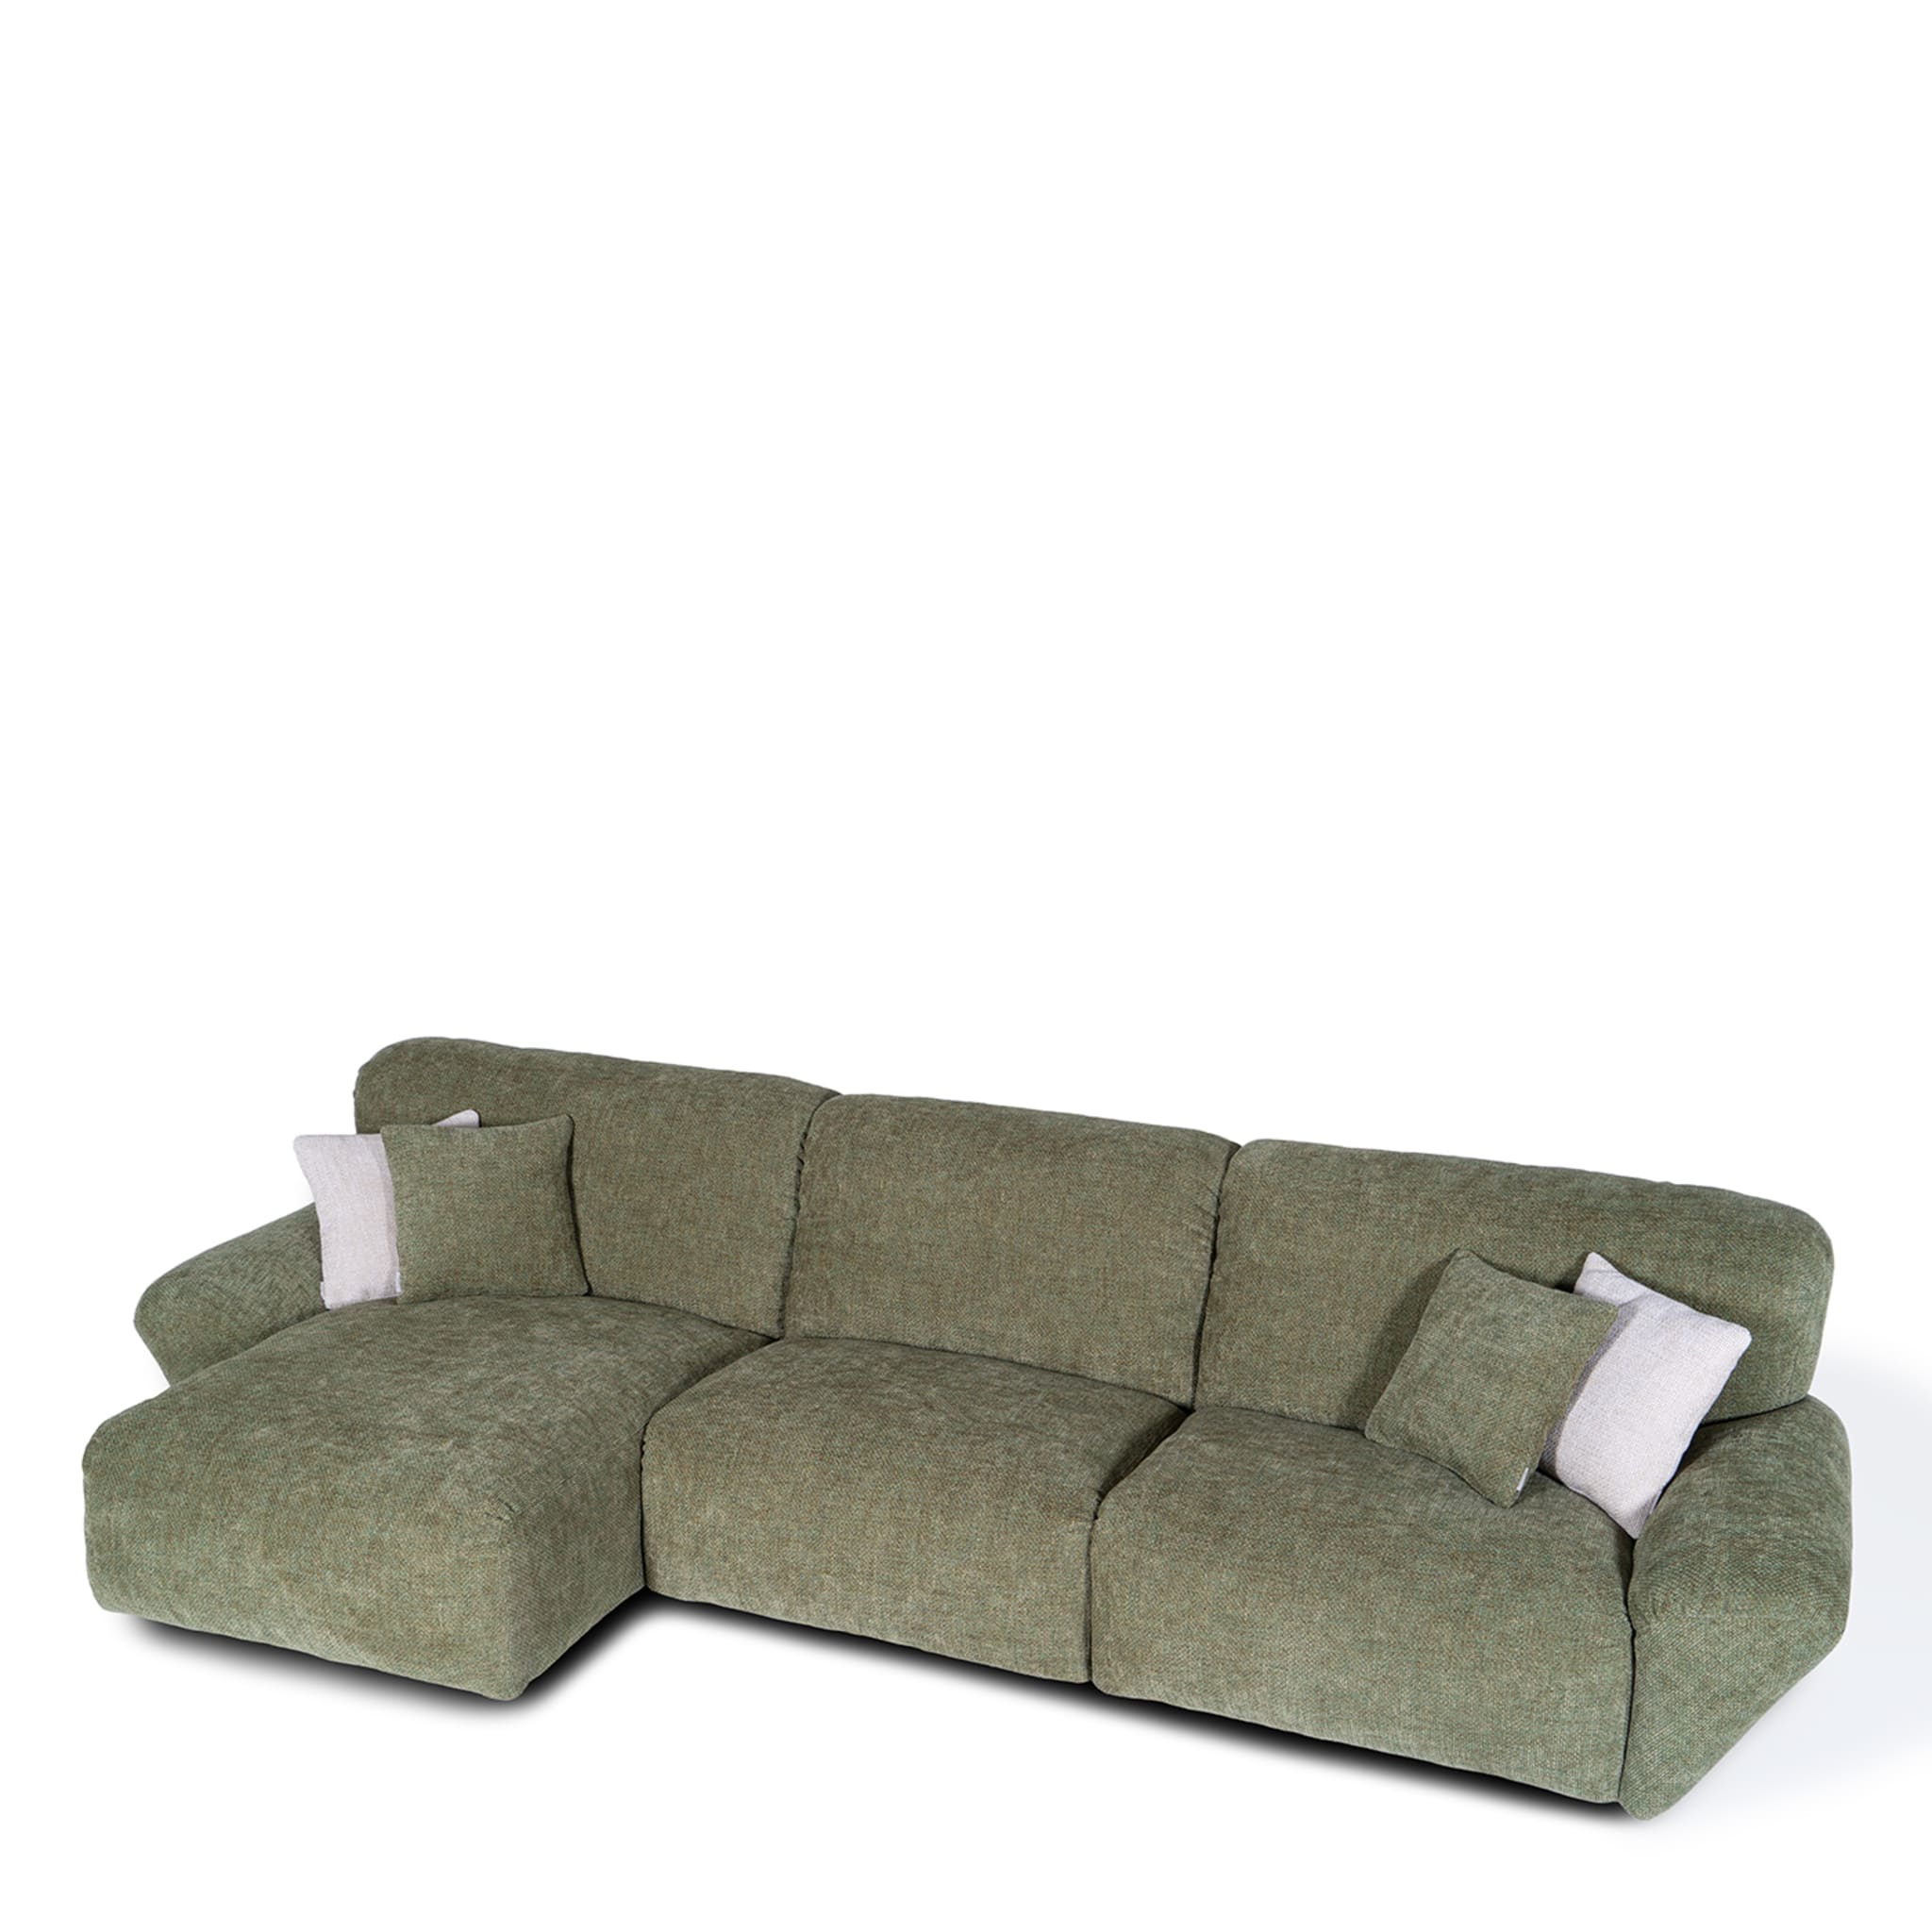 Beluga Green 3-Seater Sofa by Marco & Giulio Mantellassi - Alternative view 3